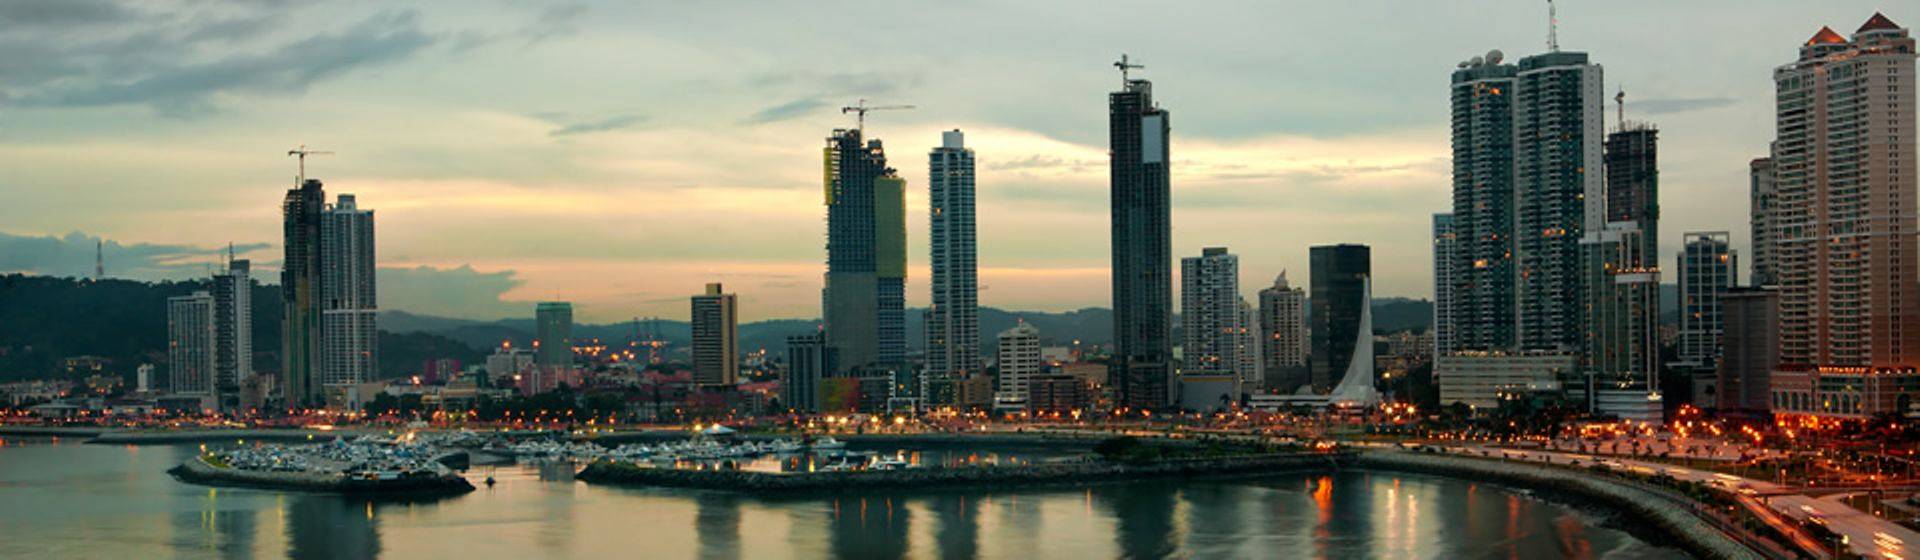 Holidays to Panama City Image